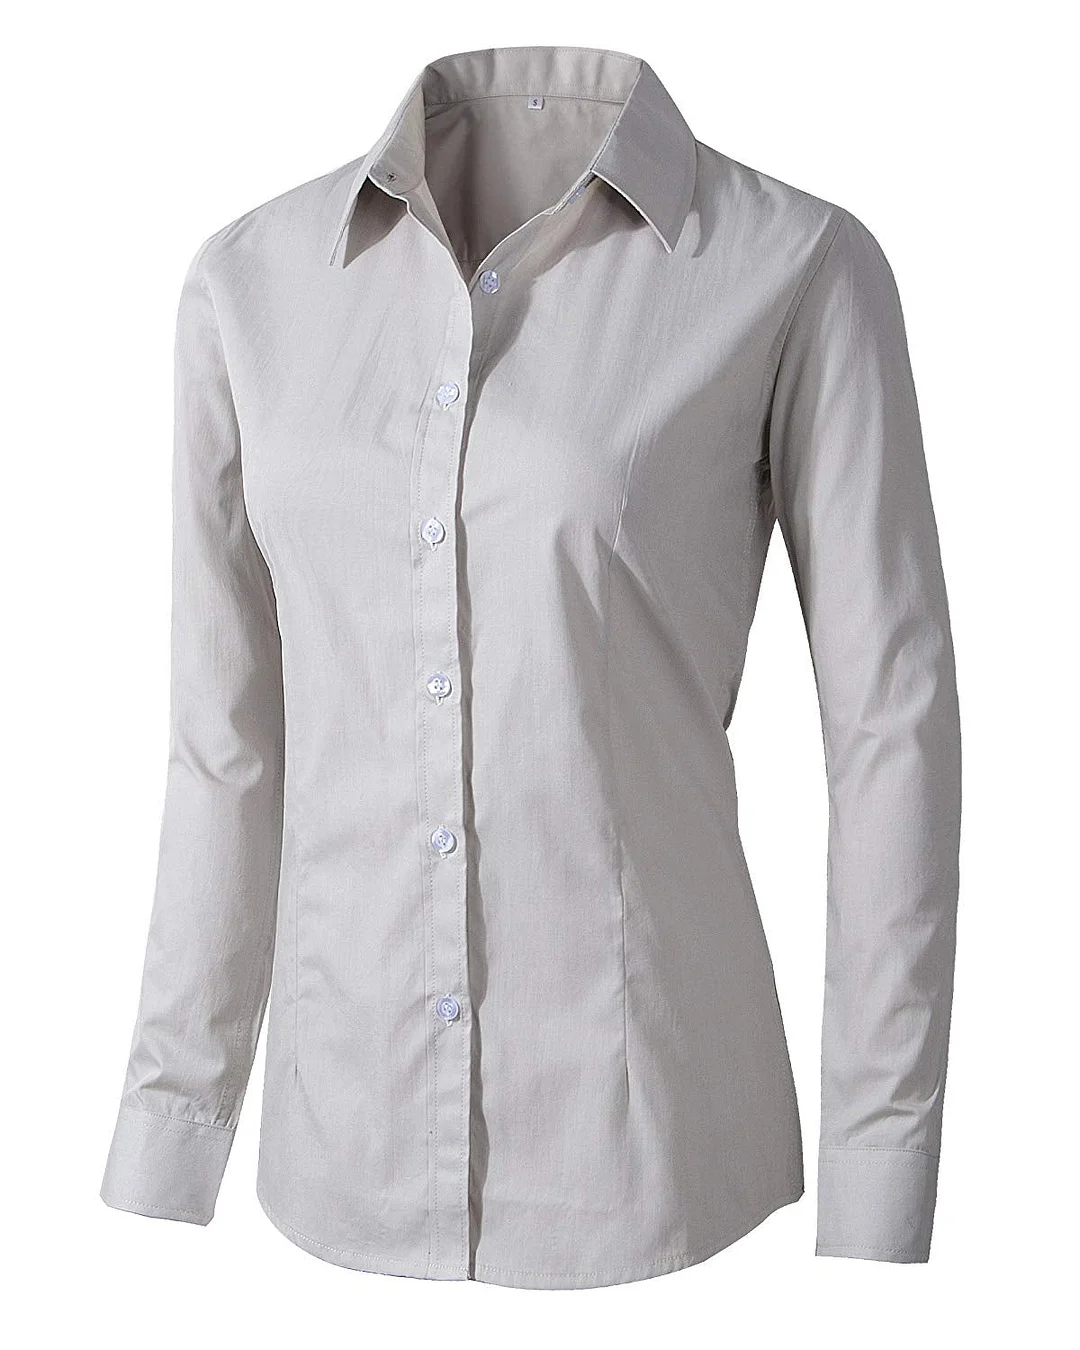 Women's Formal Work Wear White Simple Shirt